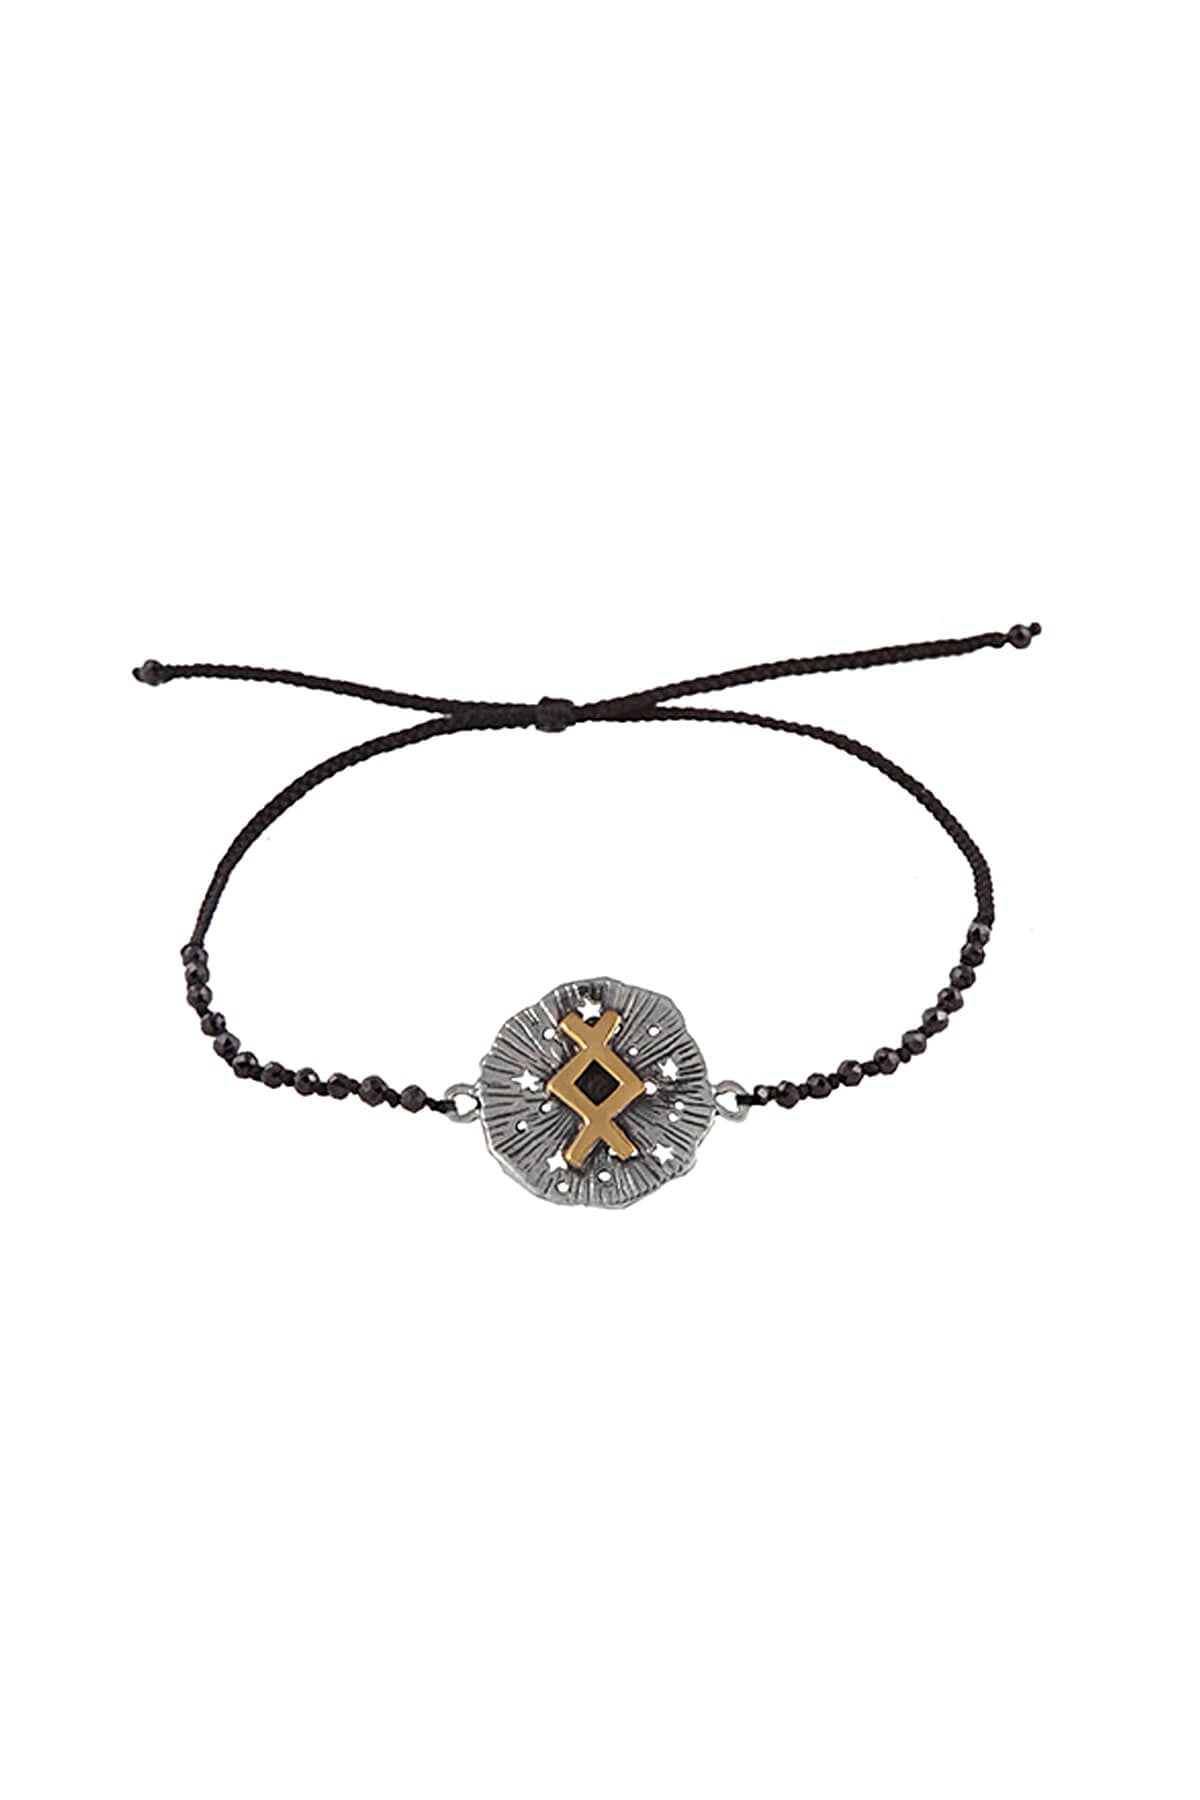 Inguz medallion bracelet with semiprecious stone beads. Silver, gold-plated, oxidized